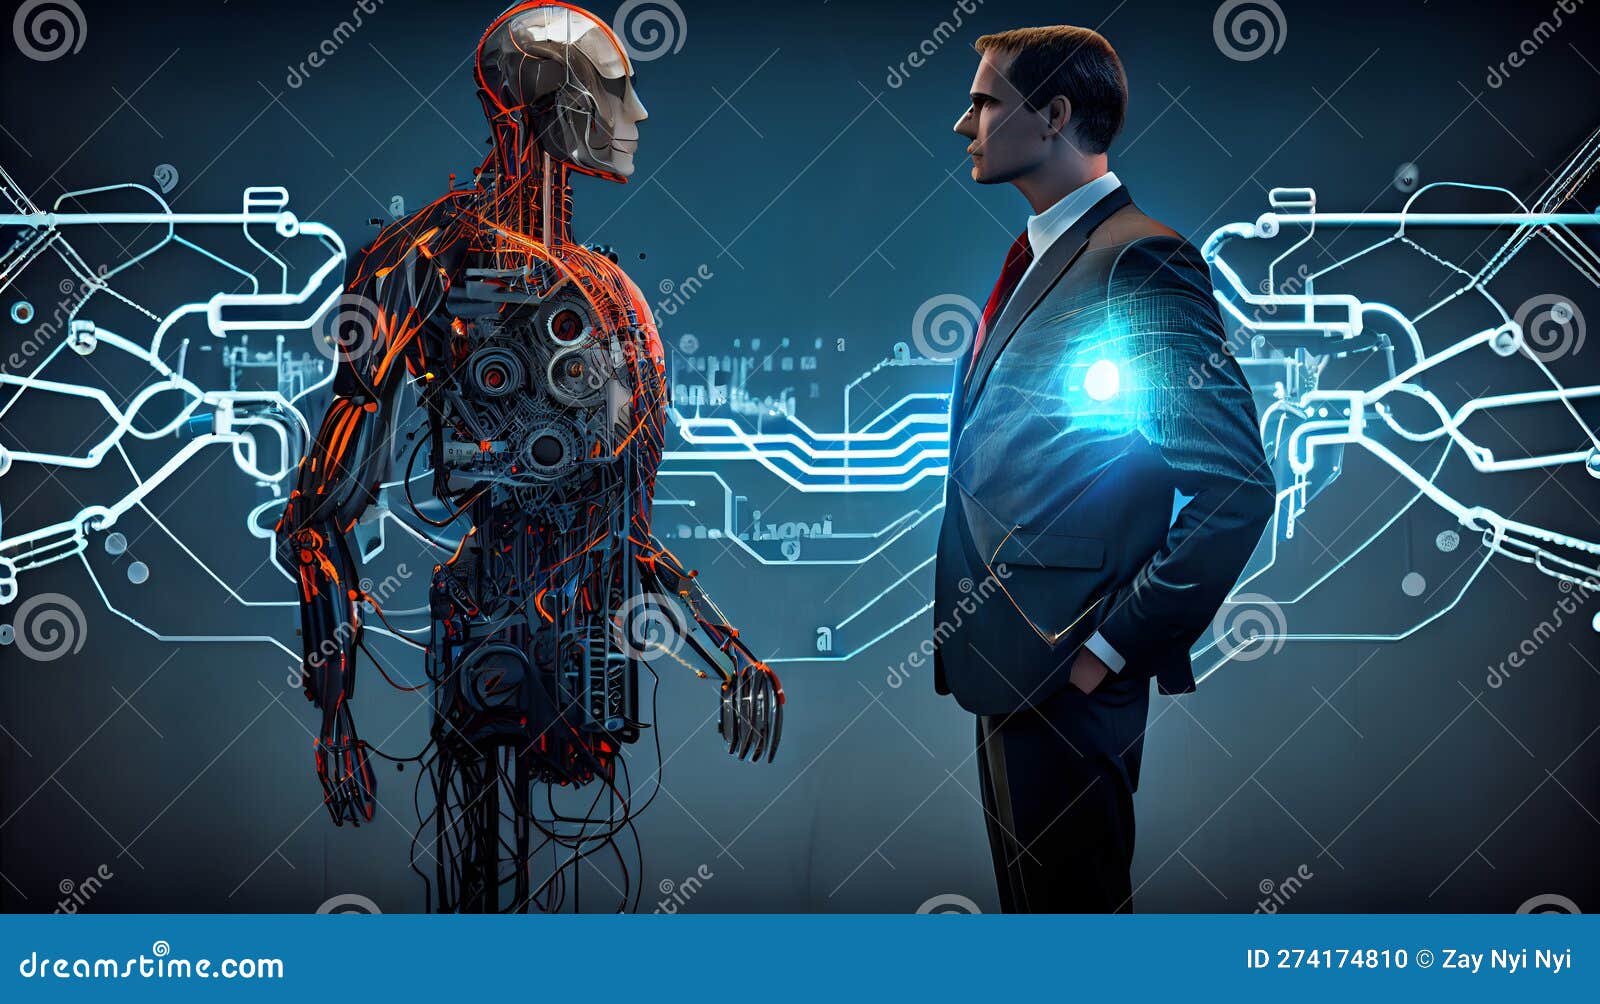 https://thumbs.dreamstime.com/z/man-ai-robot-look-each-other-concept-human-war-future-idea-274174810.jpg